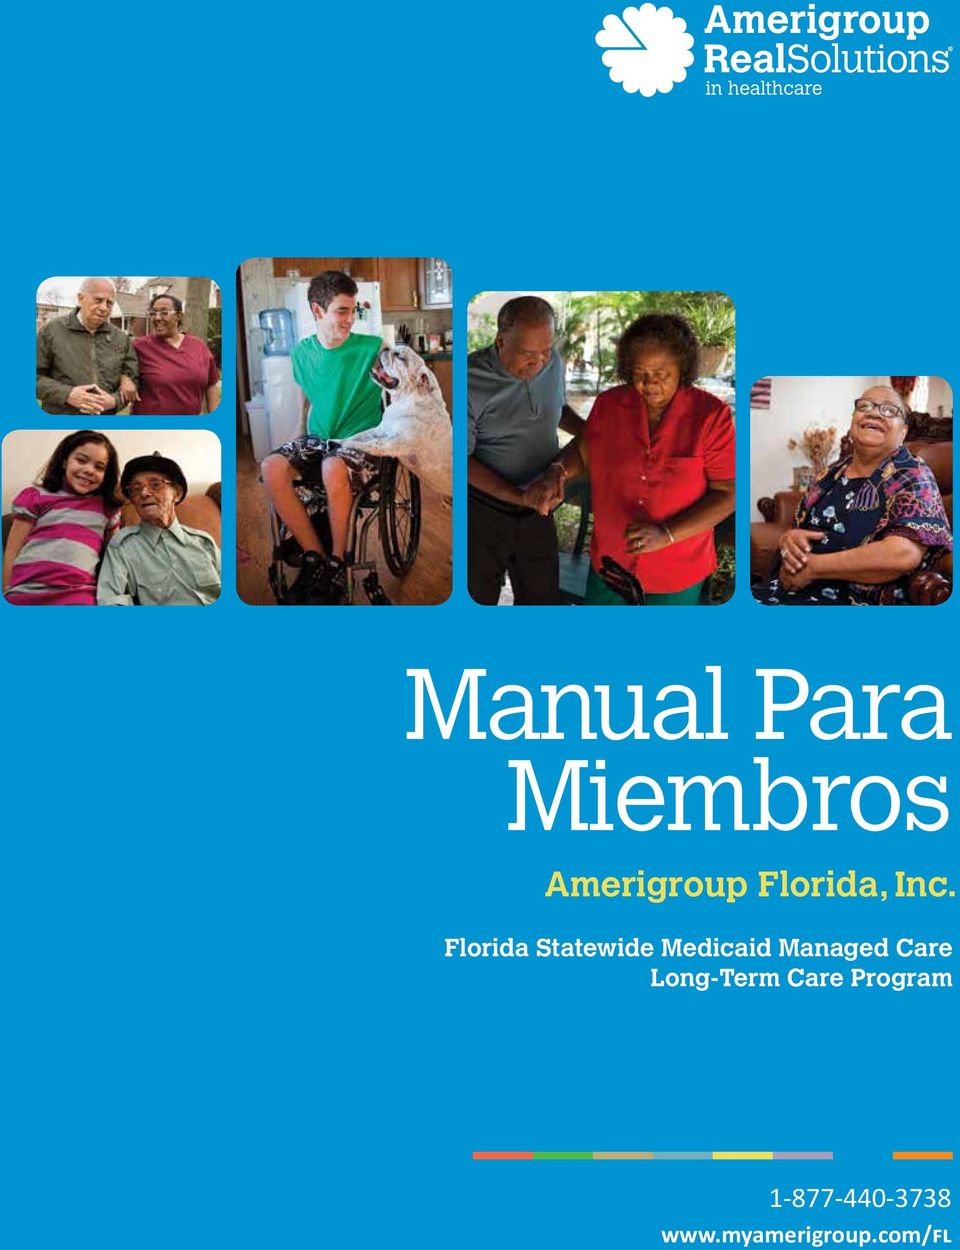 Florida Statewide Medicaid Managed